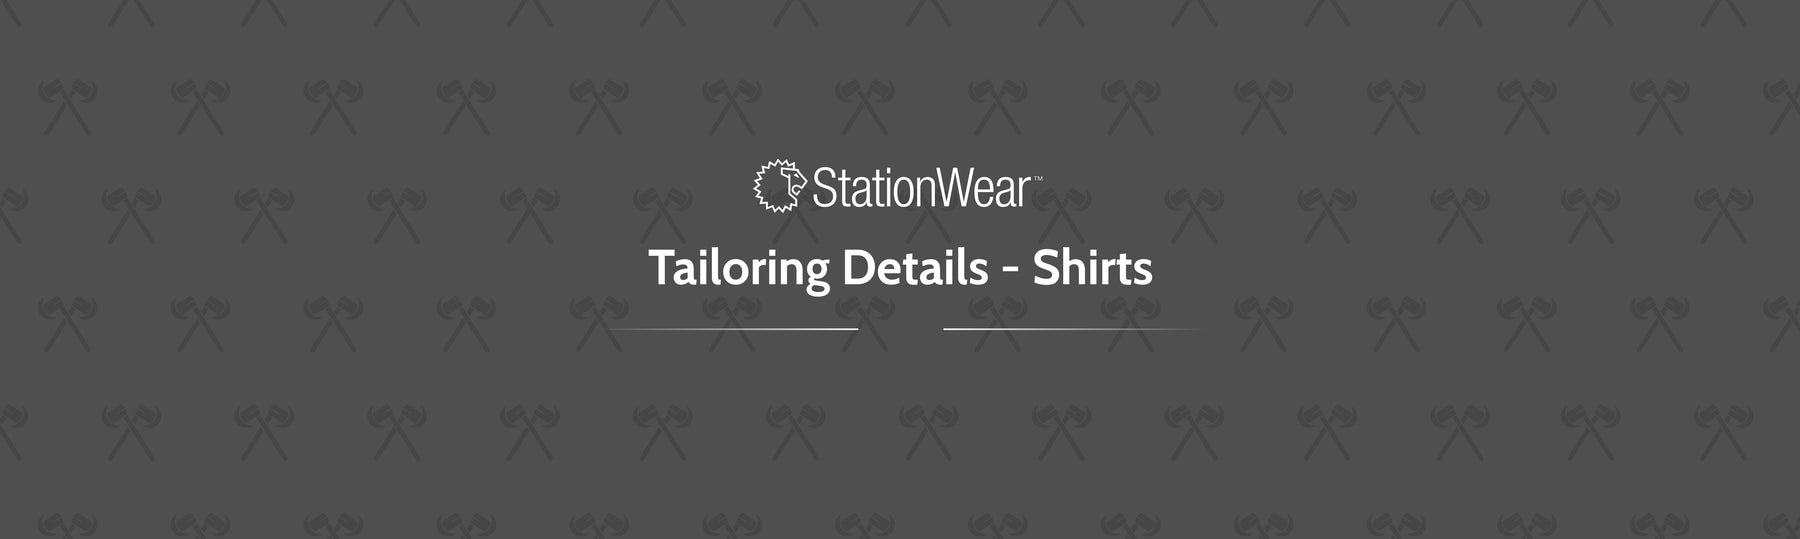 LION StationWear Tailoring Details - Shirts